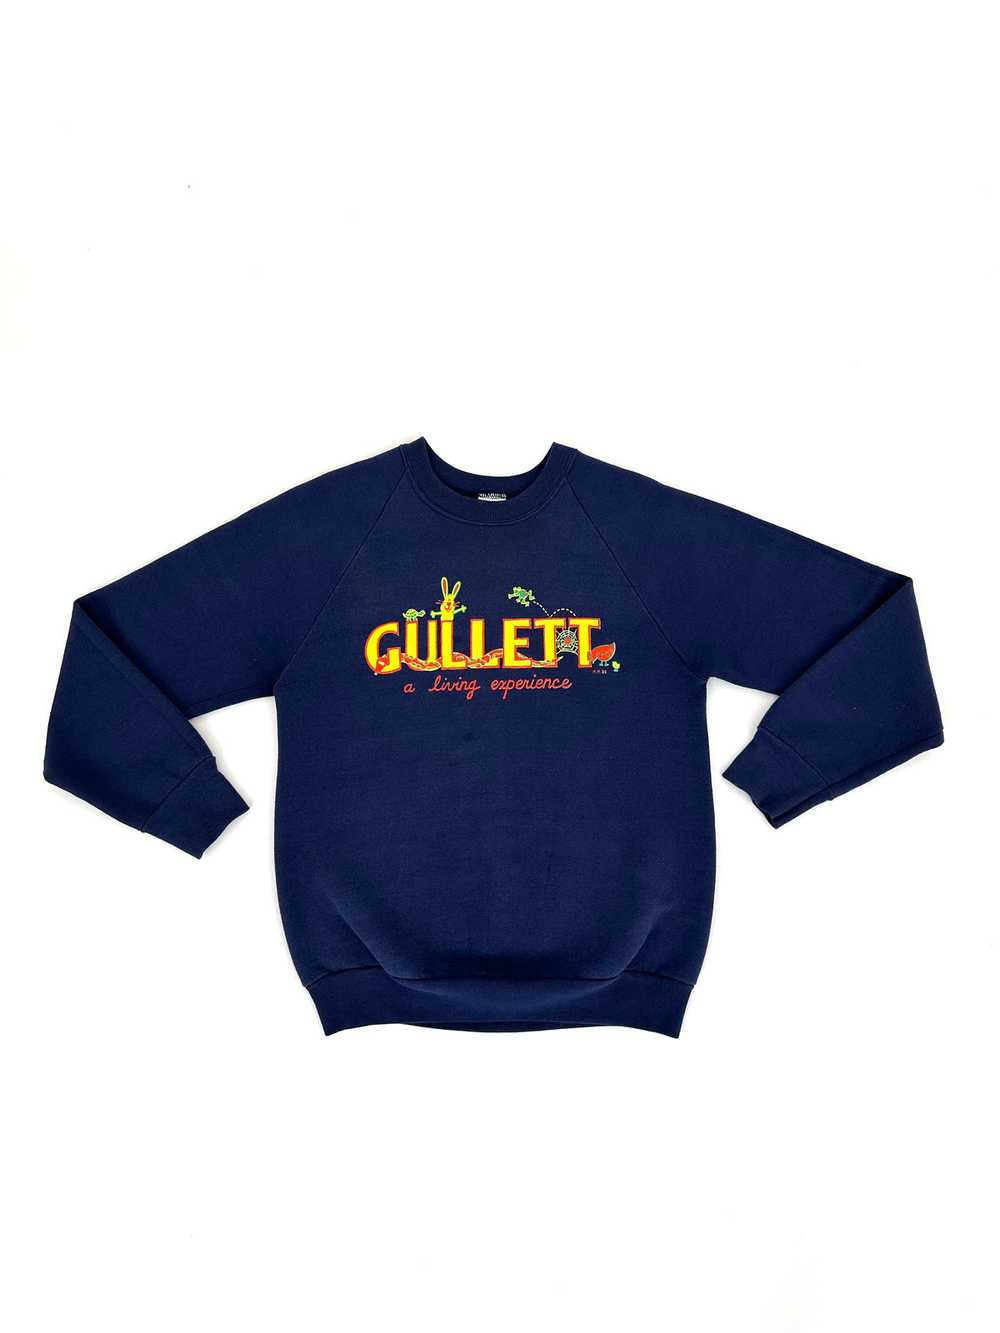 Gullett Crew Neck Sweatshirt - image 1